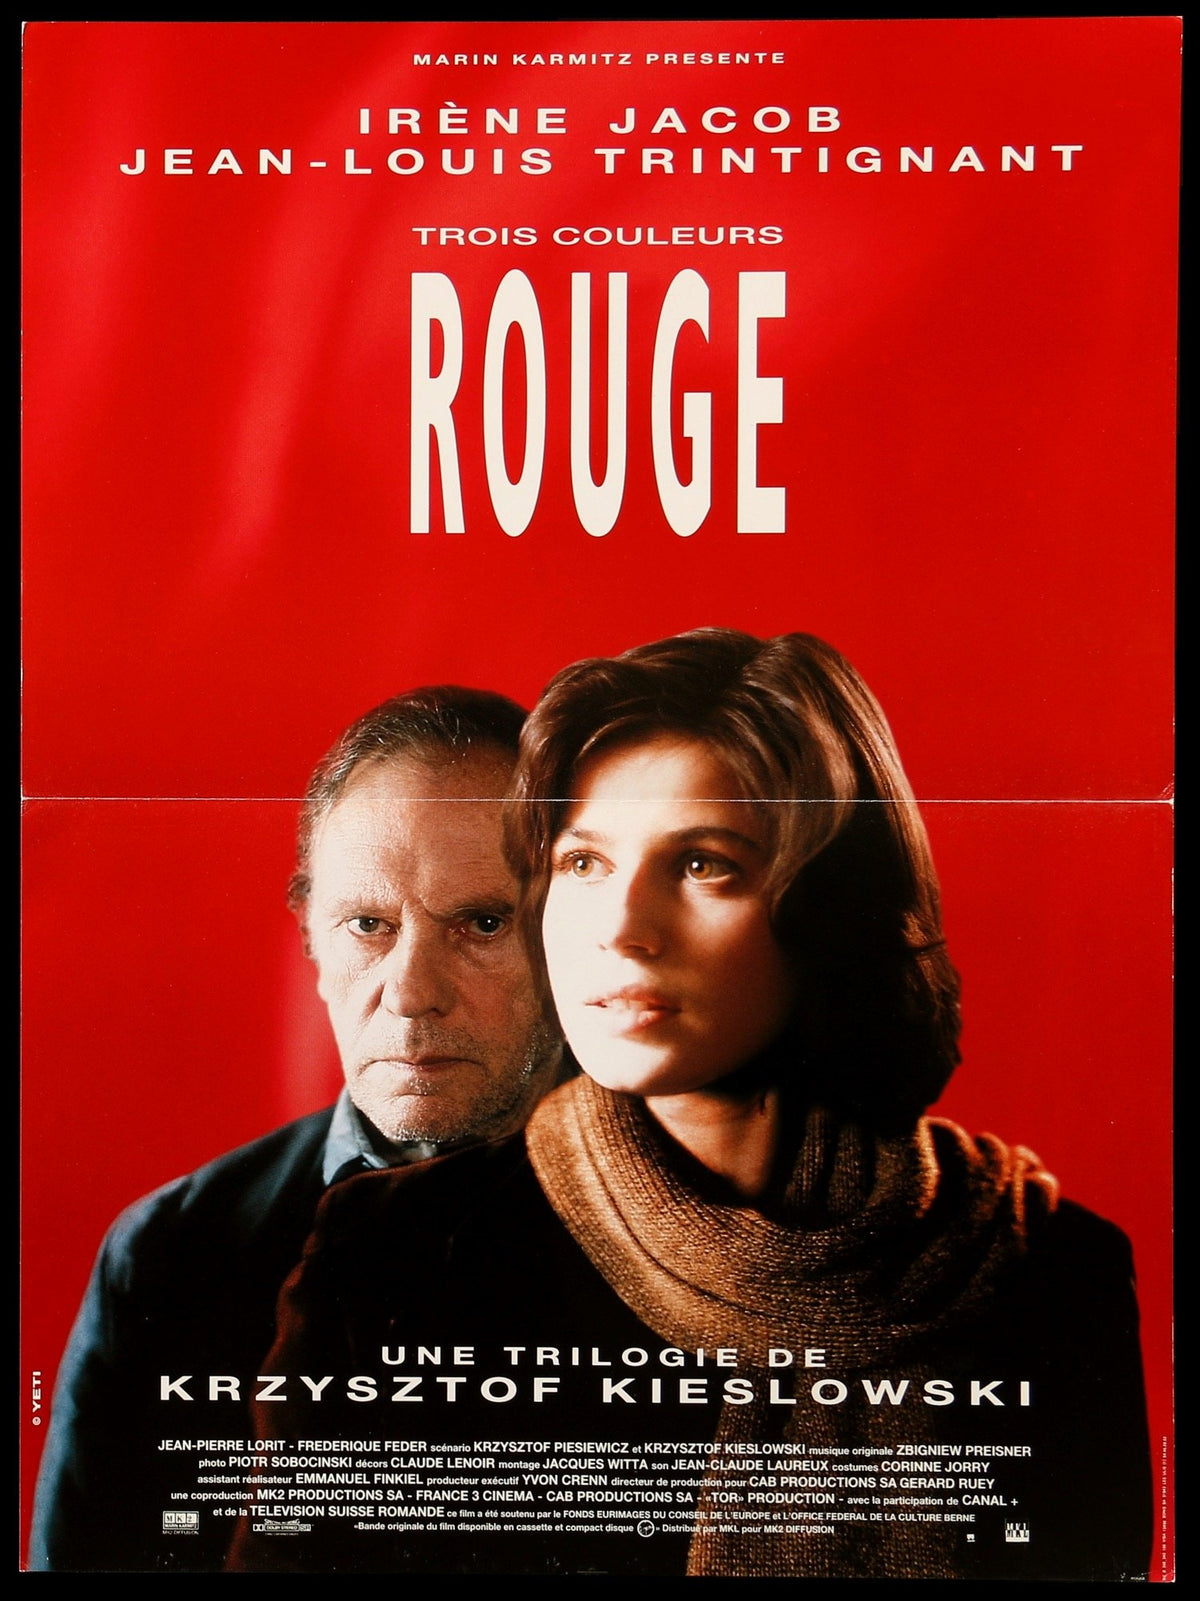 Red (1994) original movie poster for sale at Original Film Art